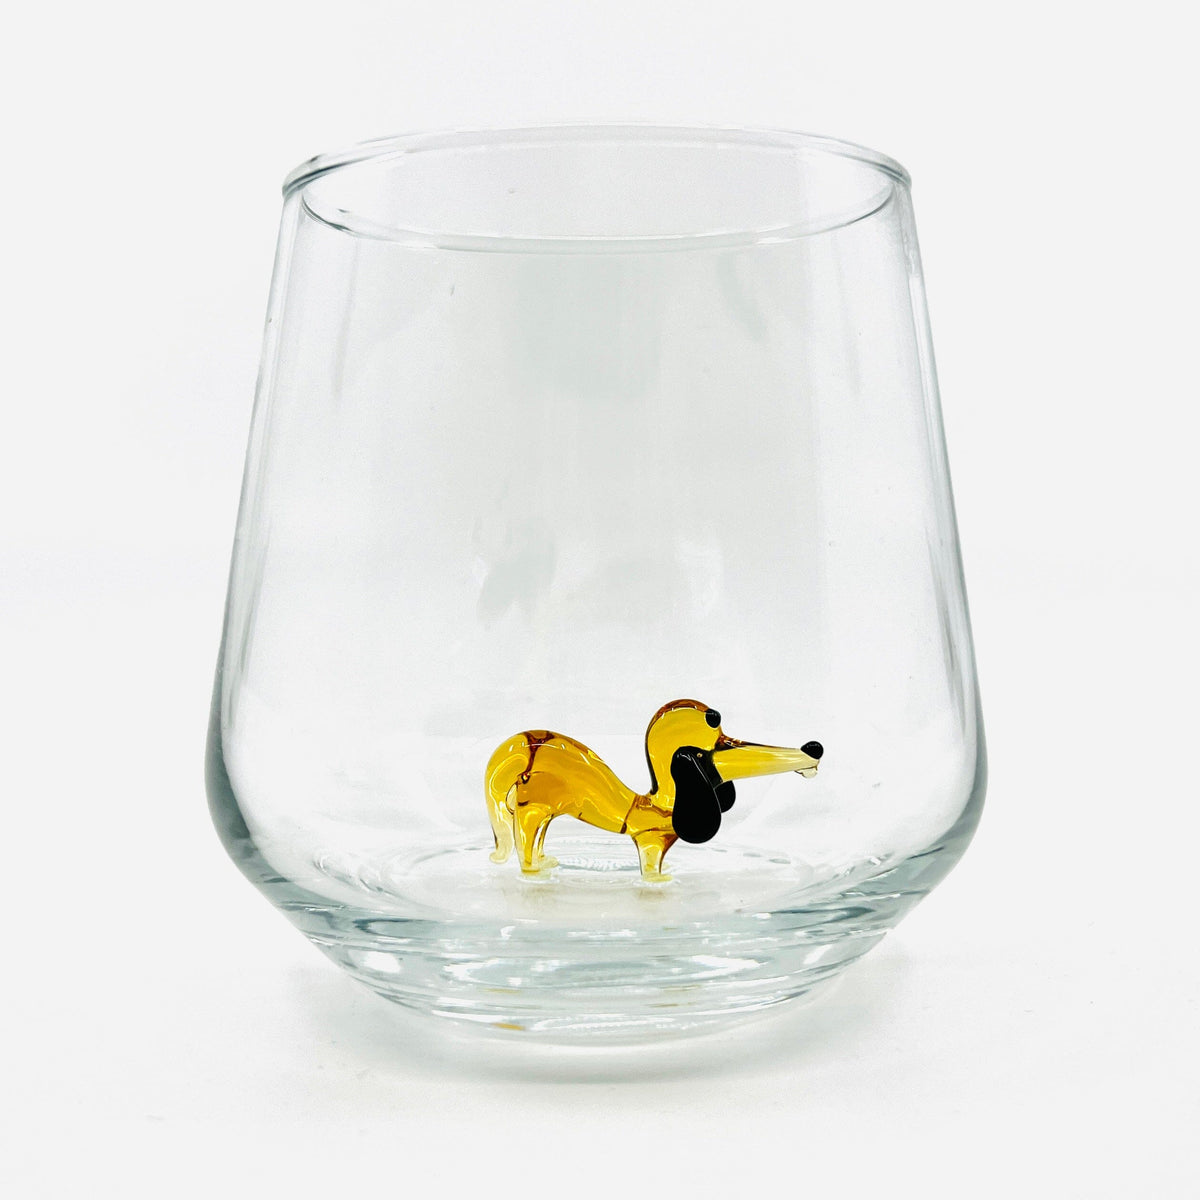 Tiny Animal Wine Glass, Brown Dachshund Dog Decor MiniZoo 